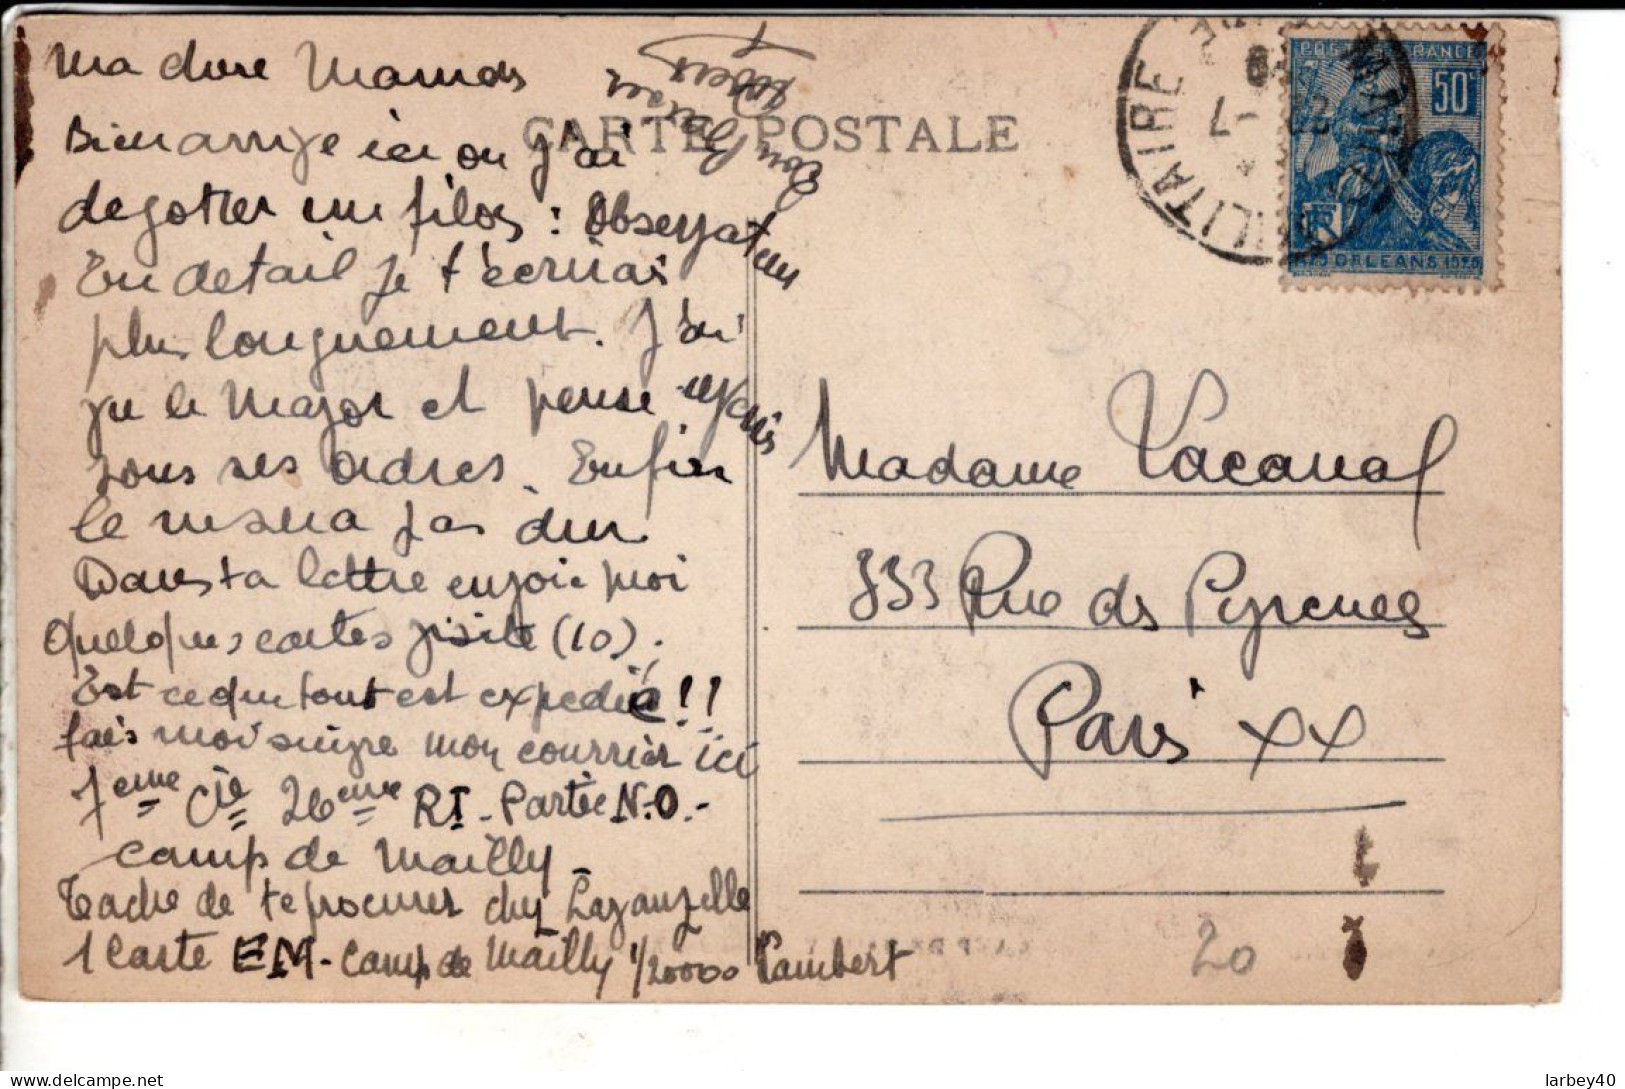 Camp De Mailly , Vue Des Baraquements - Cartes Postales Ancienne - Mailly-le-Camp